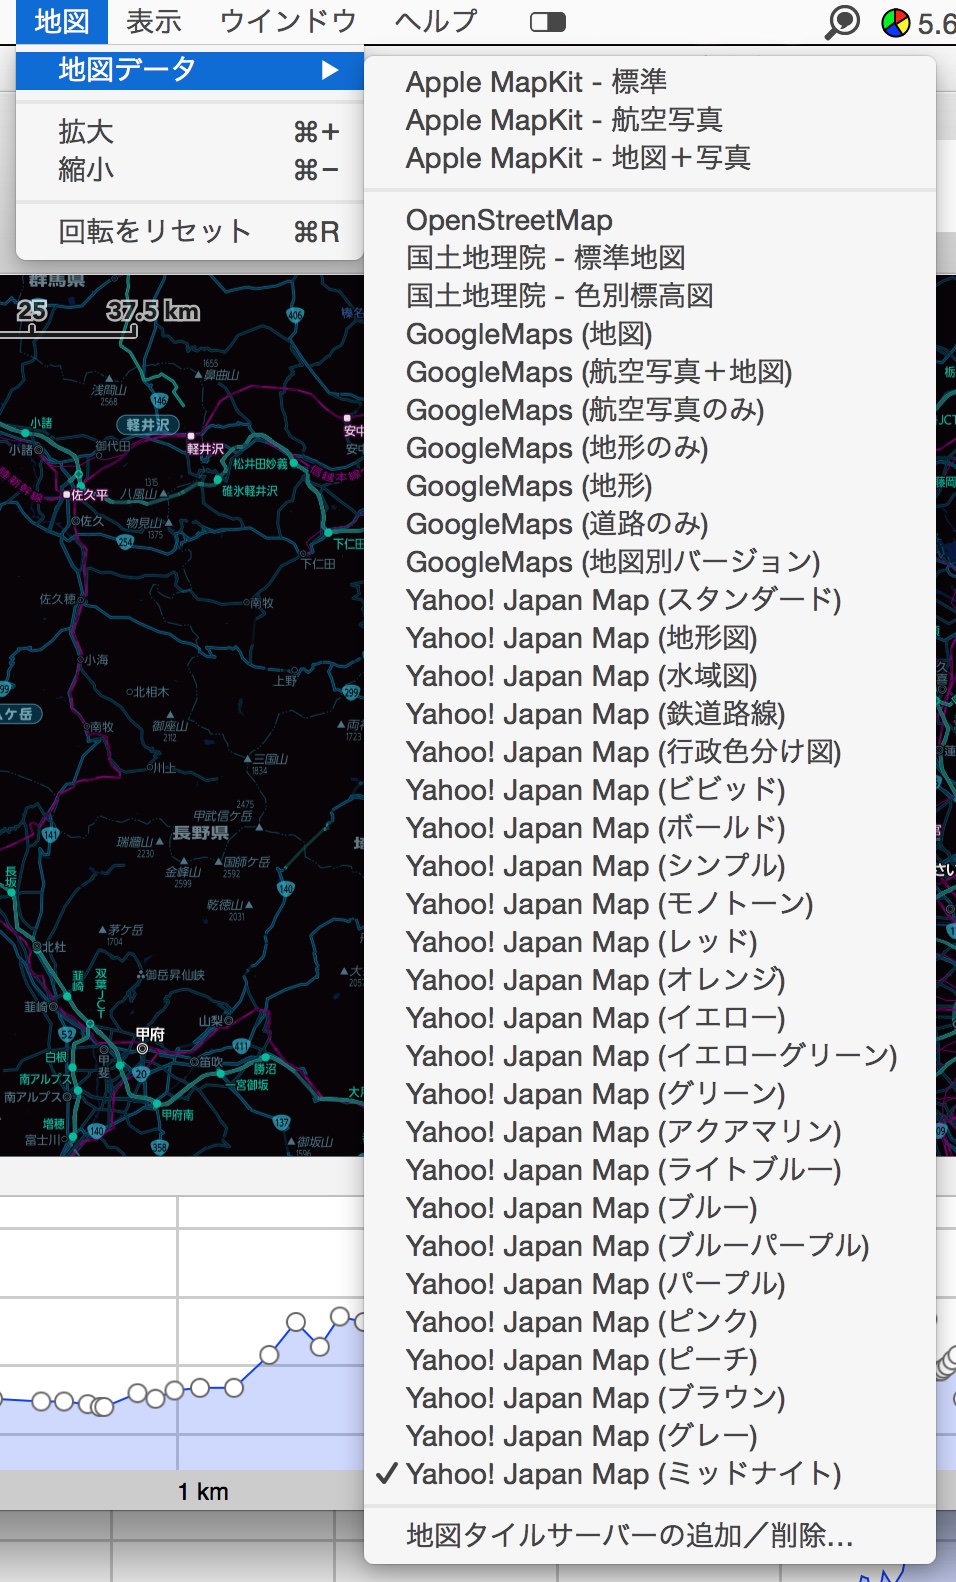 Gpx binder google maps yahoo japan maps 00008